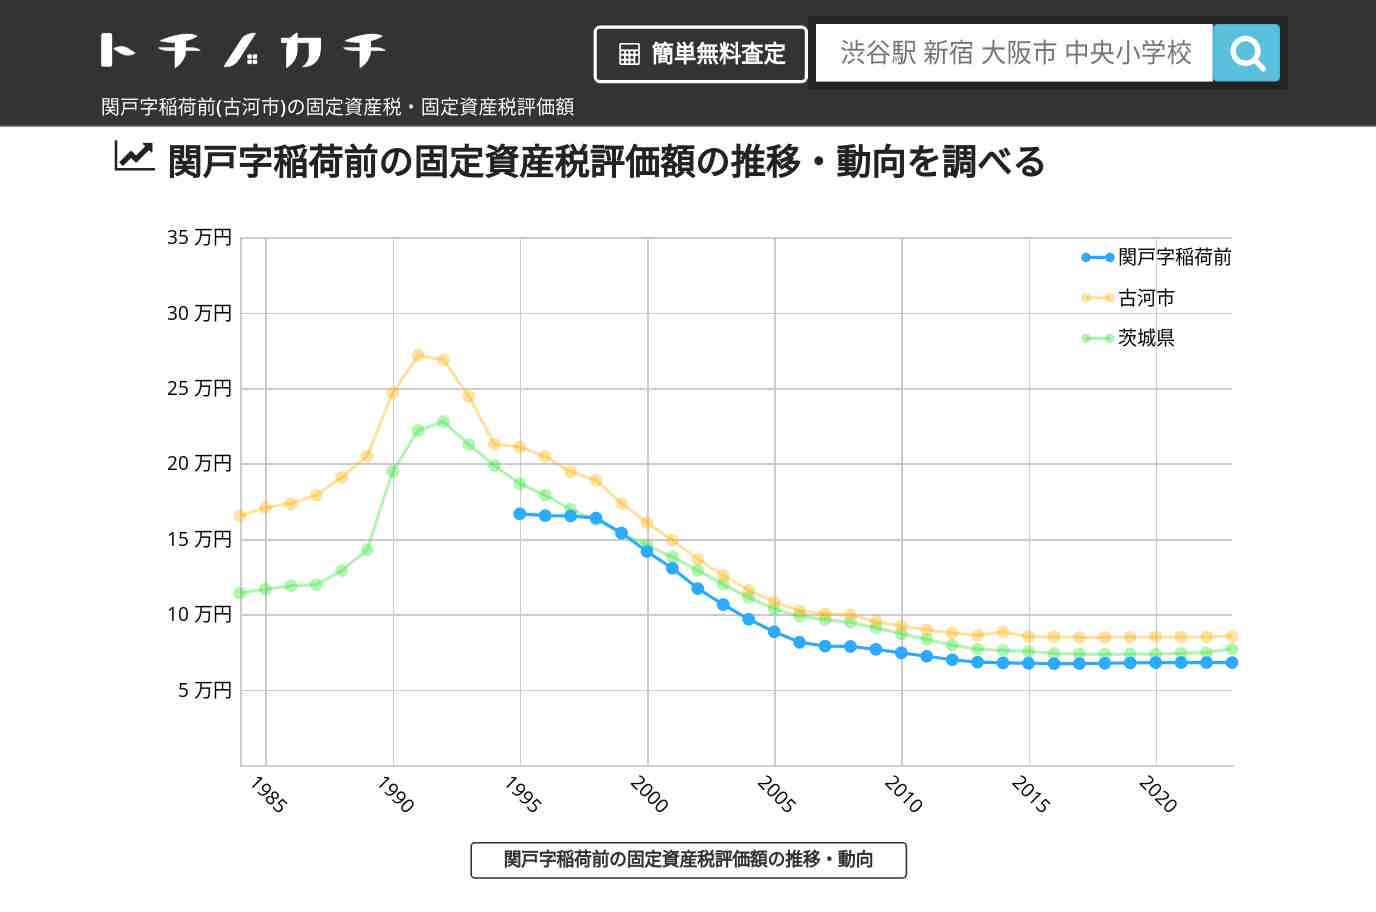 関戸字稲荷前(古河市)の固定資産税・固定資産税評価額 | トチノカチ